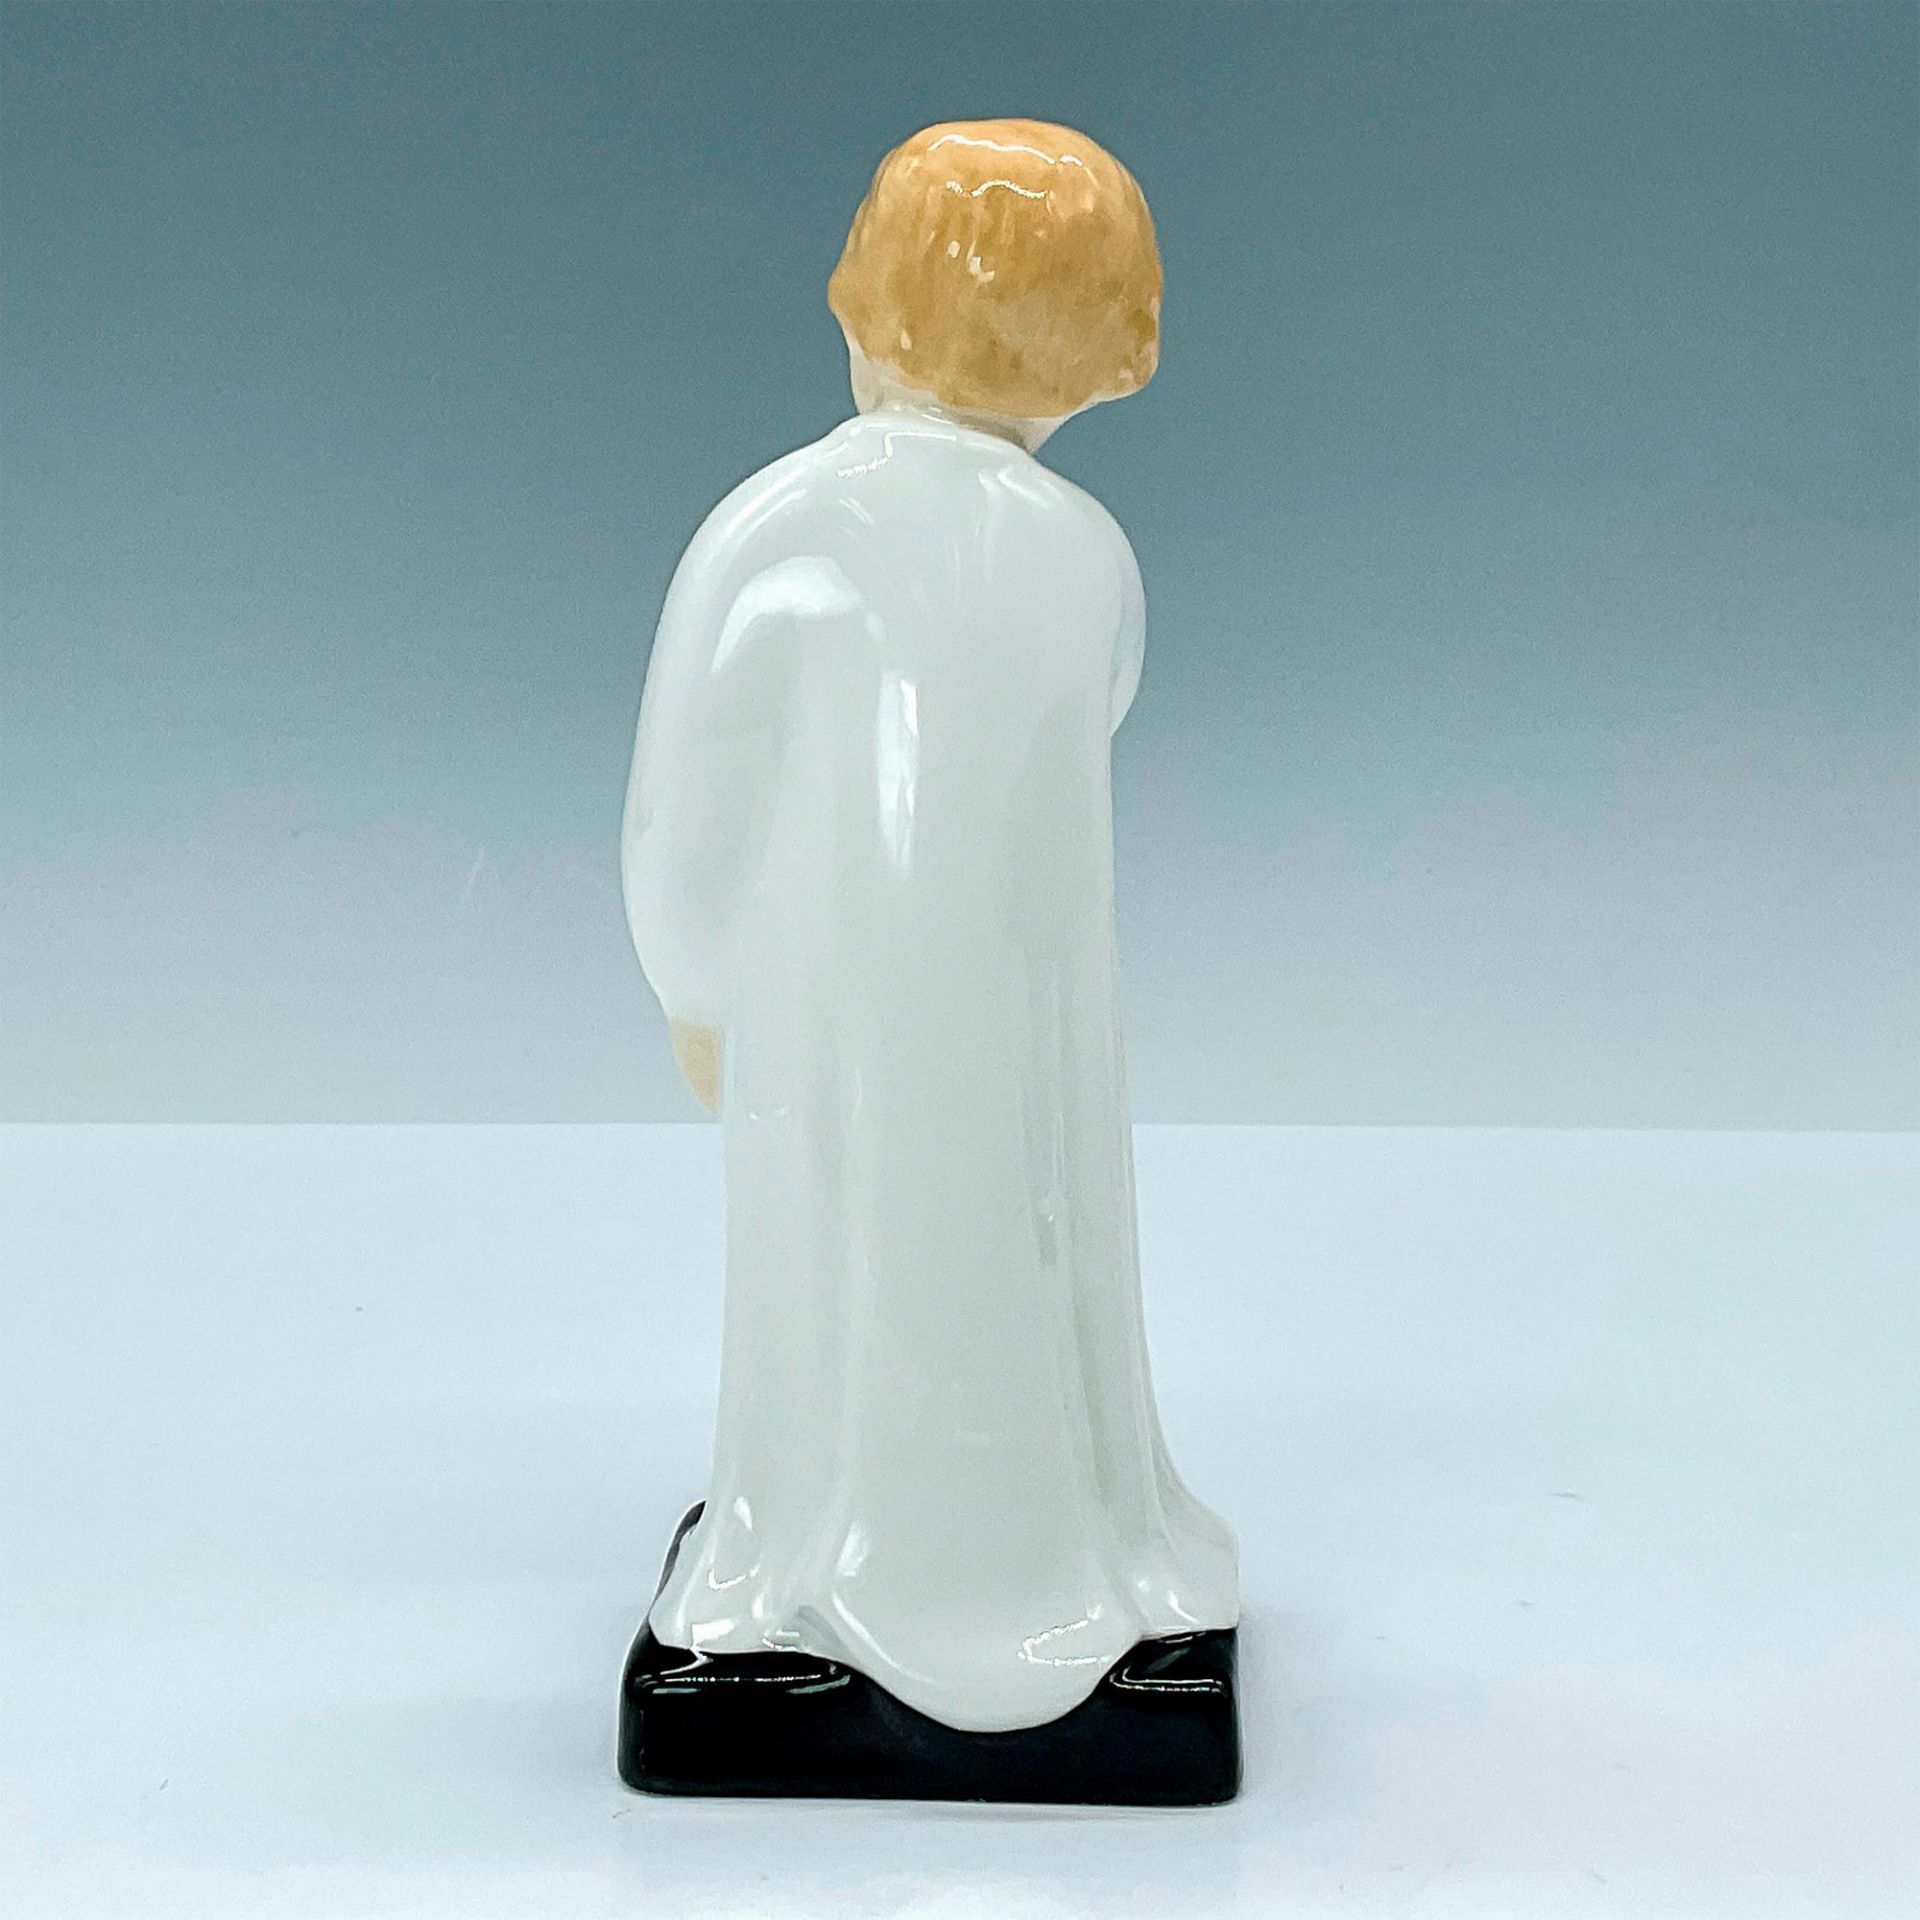 Darling - HN1985 - Royal Doulton Figurine - Image 2 of 3